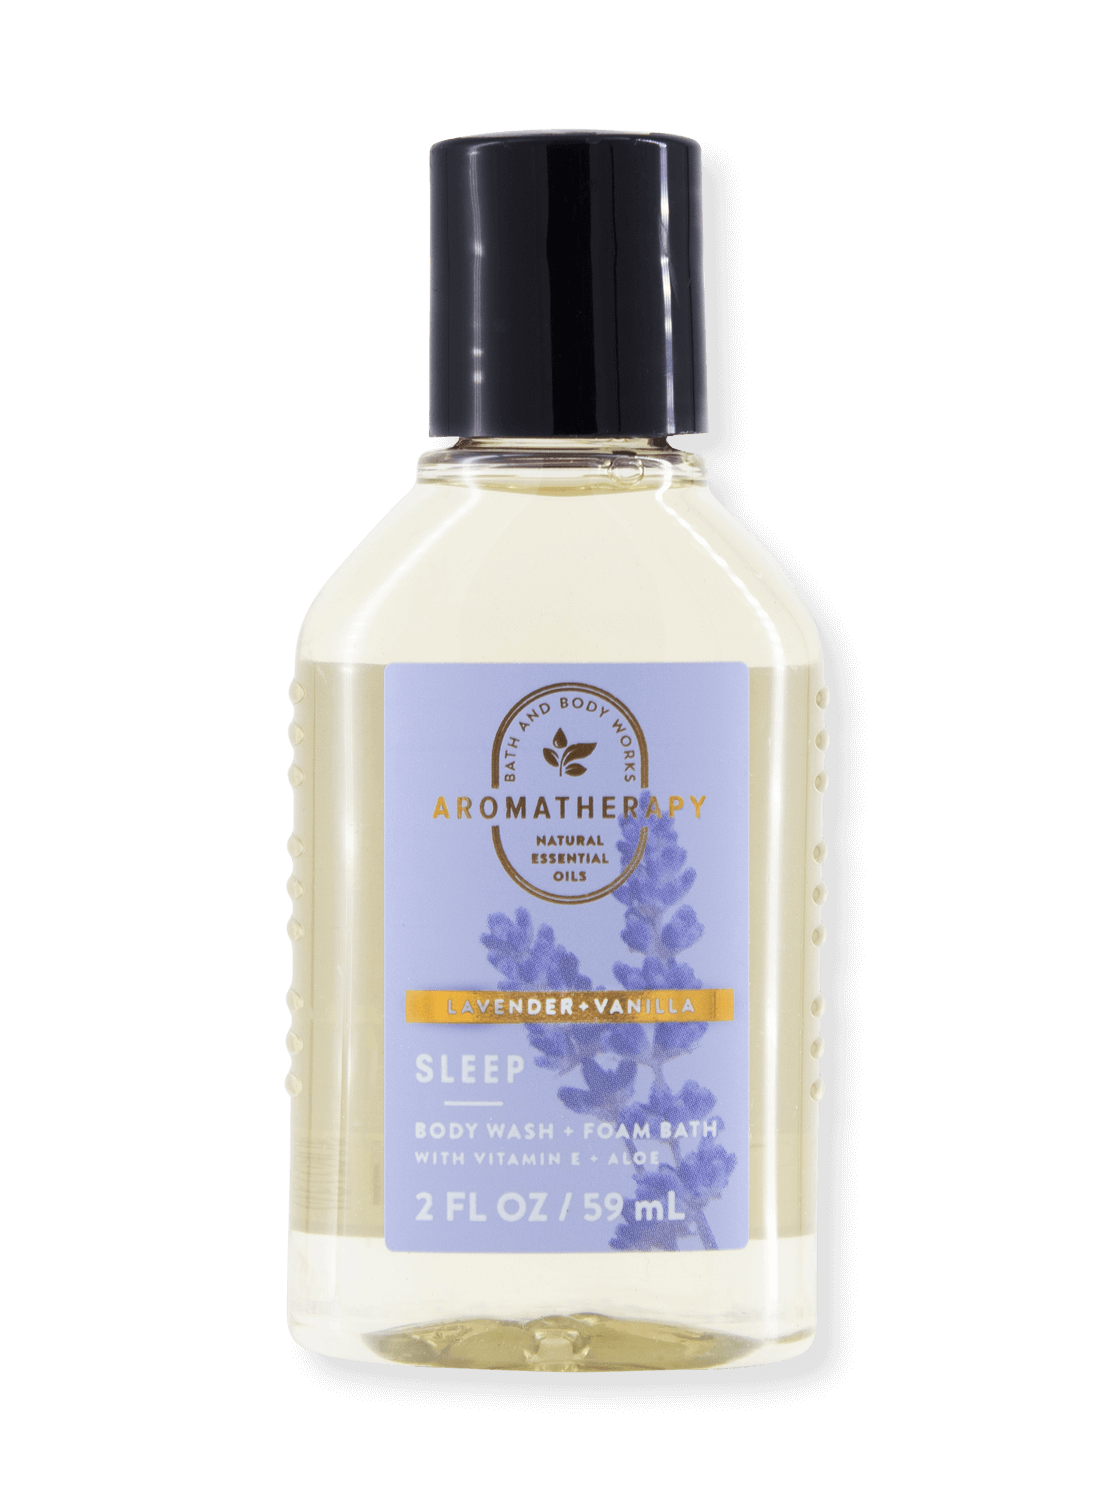 Gel de douche - Aromatherapy Sleep - Lavender & Vanilla (taille de voyage) - 59 ml